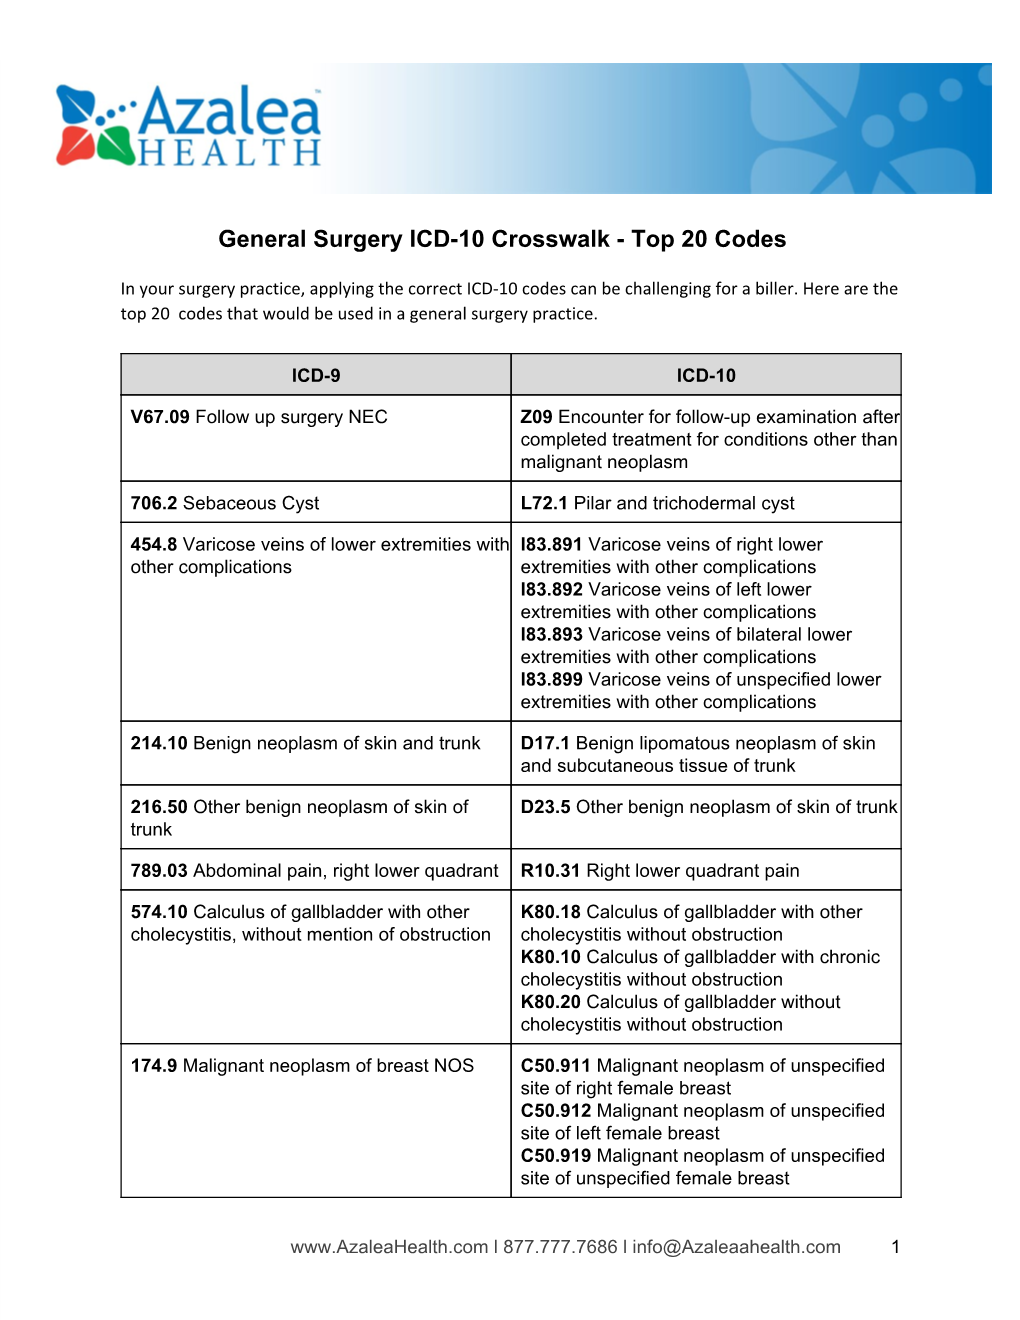 General Surgery ICD10 Crosswalk Top 20 Codes